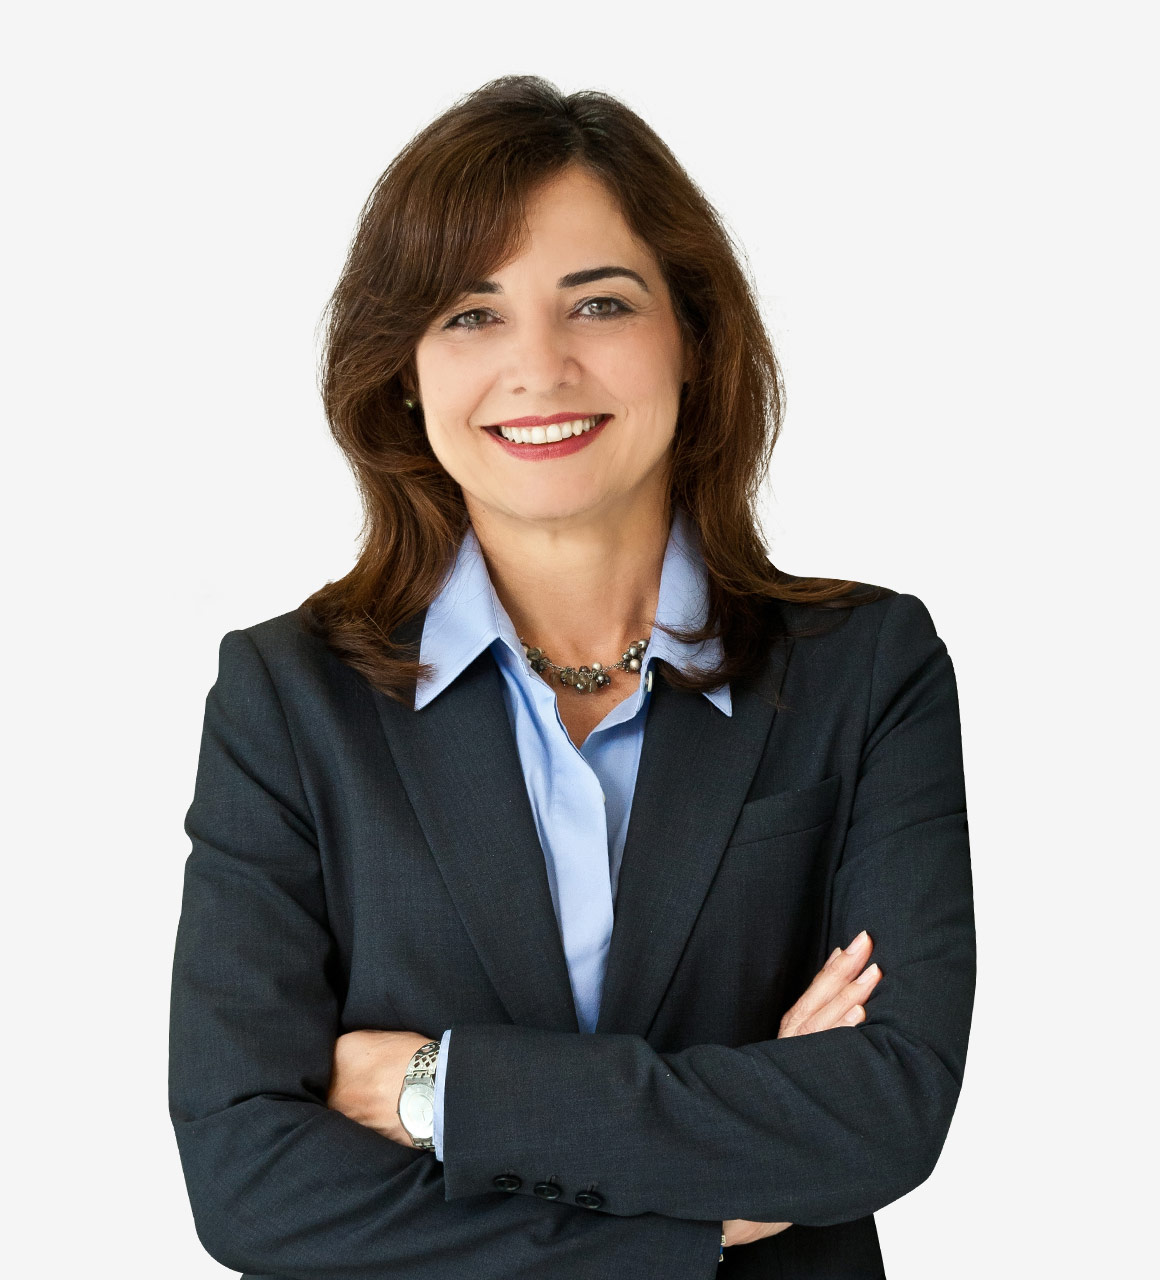 Cristina Carvalho, Managing Partner at Arent Fox